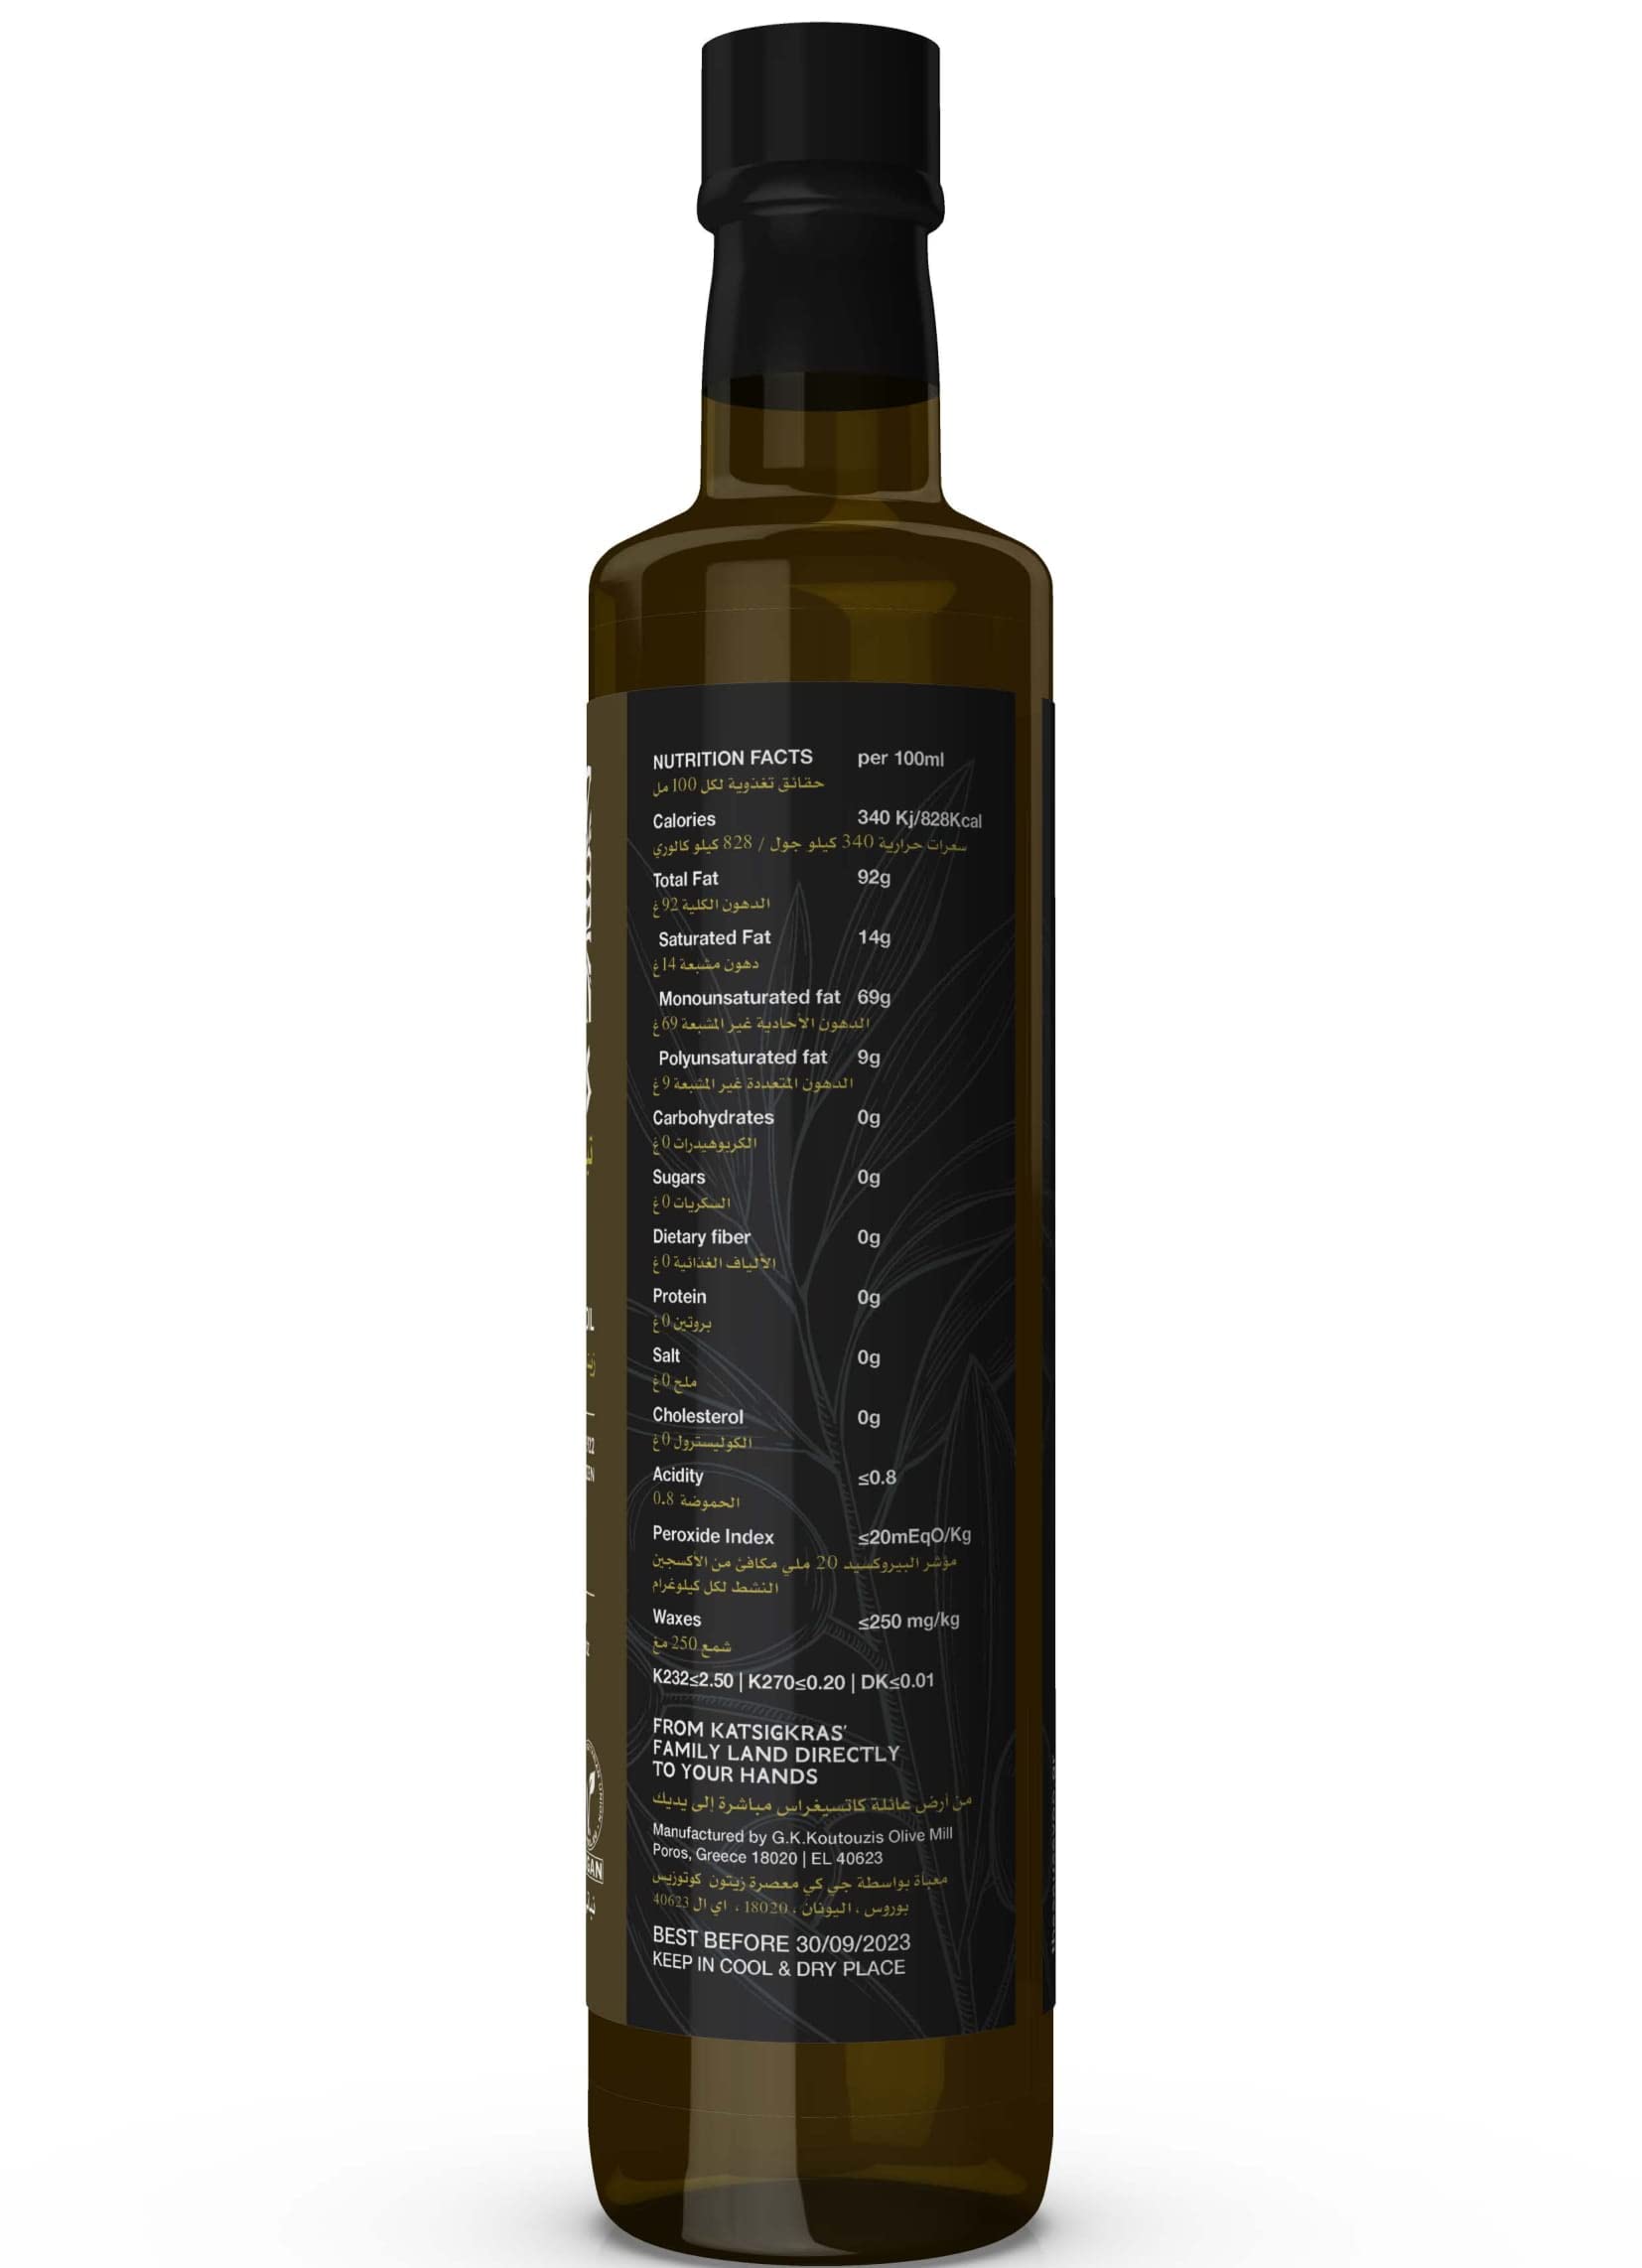 Theseus Koroneiki Greek Organic Extra Virgin Vegan Olive Oil 500 ml